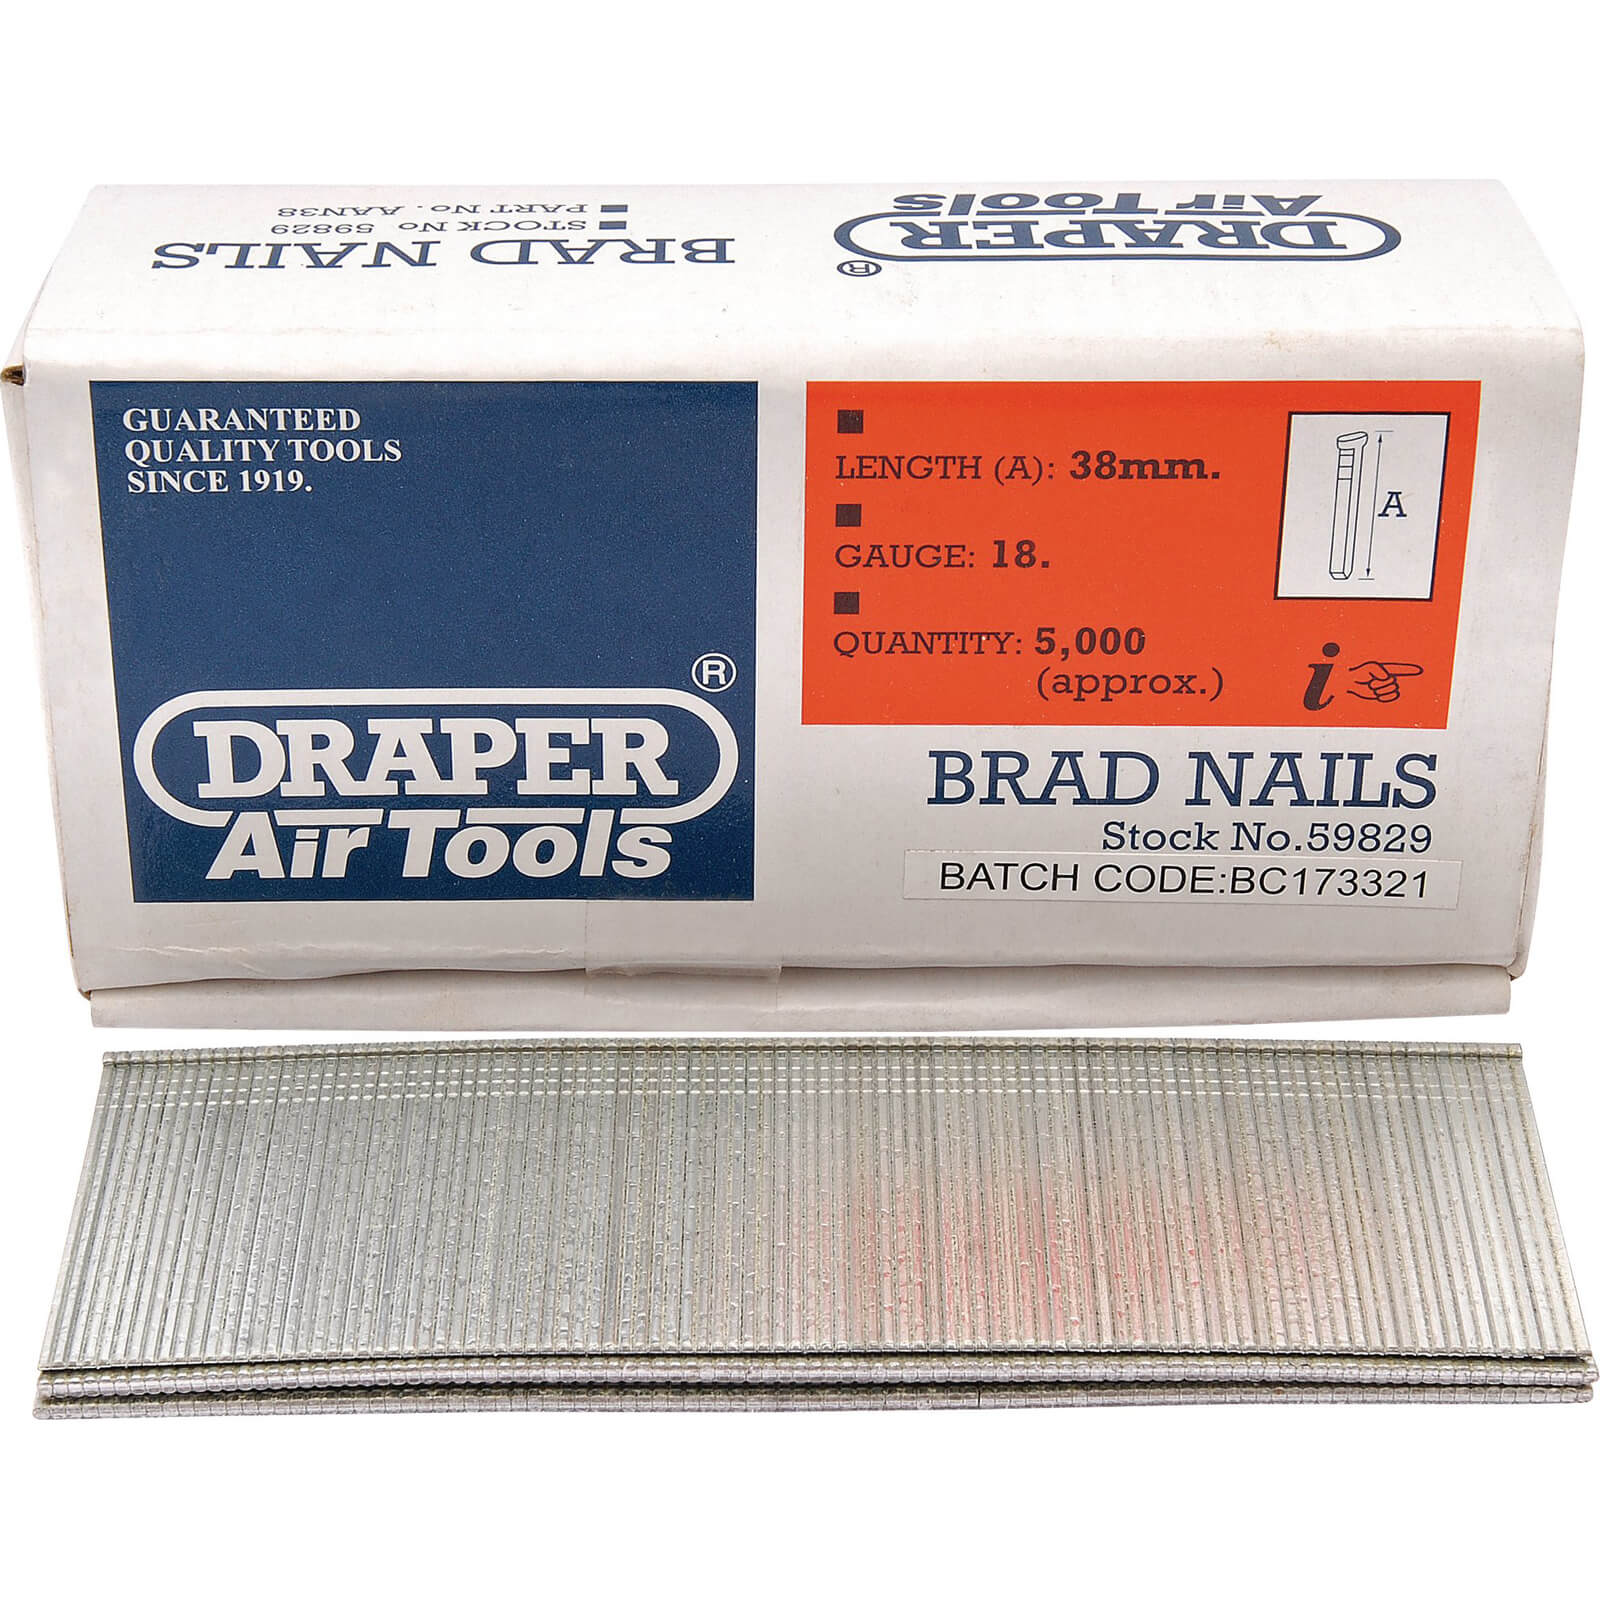 Image of Draper 18 Gauge Brad Nails 38mm Pack of 5000